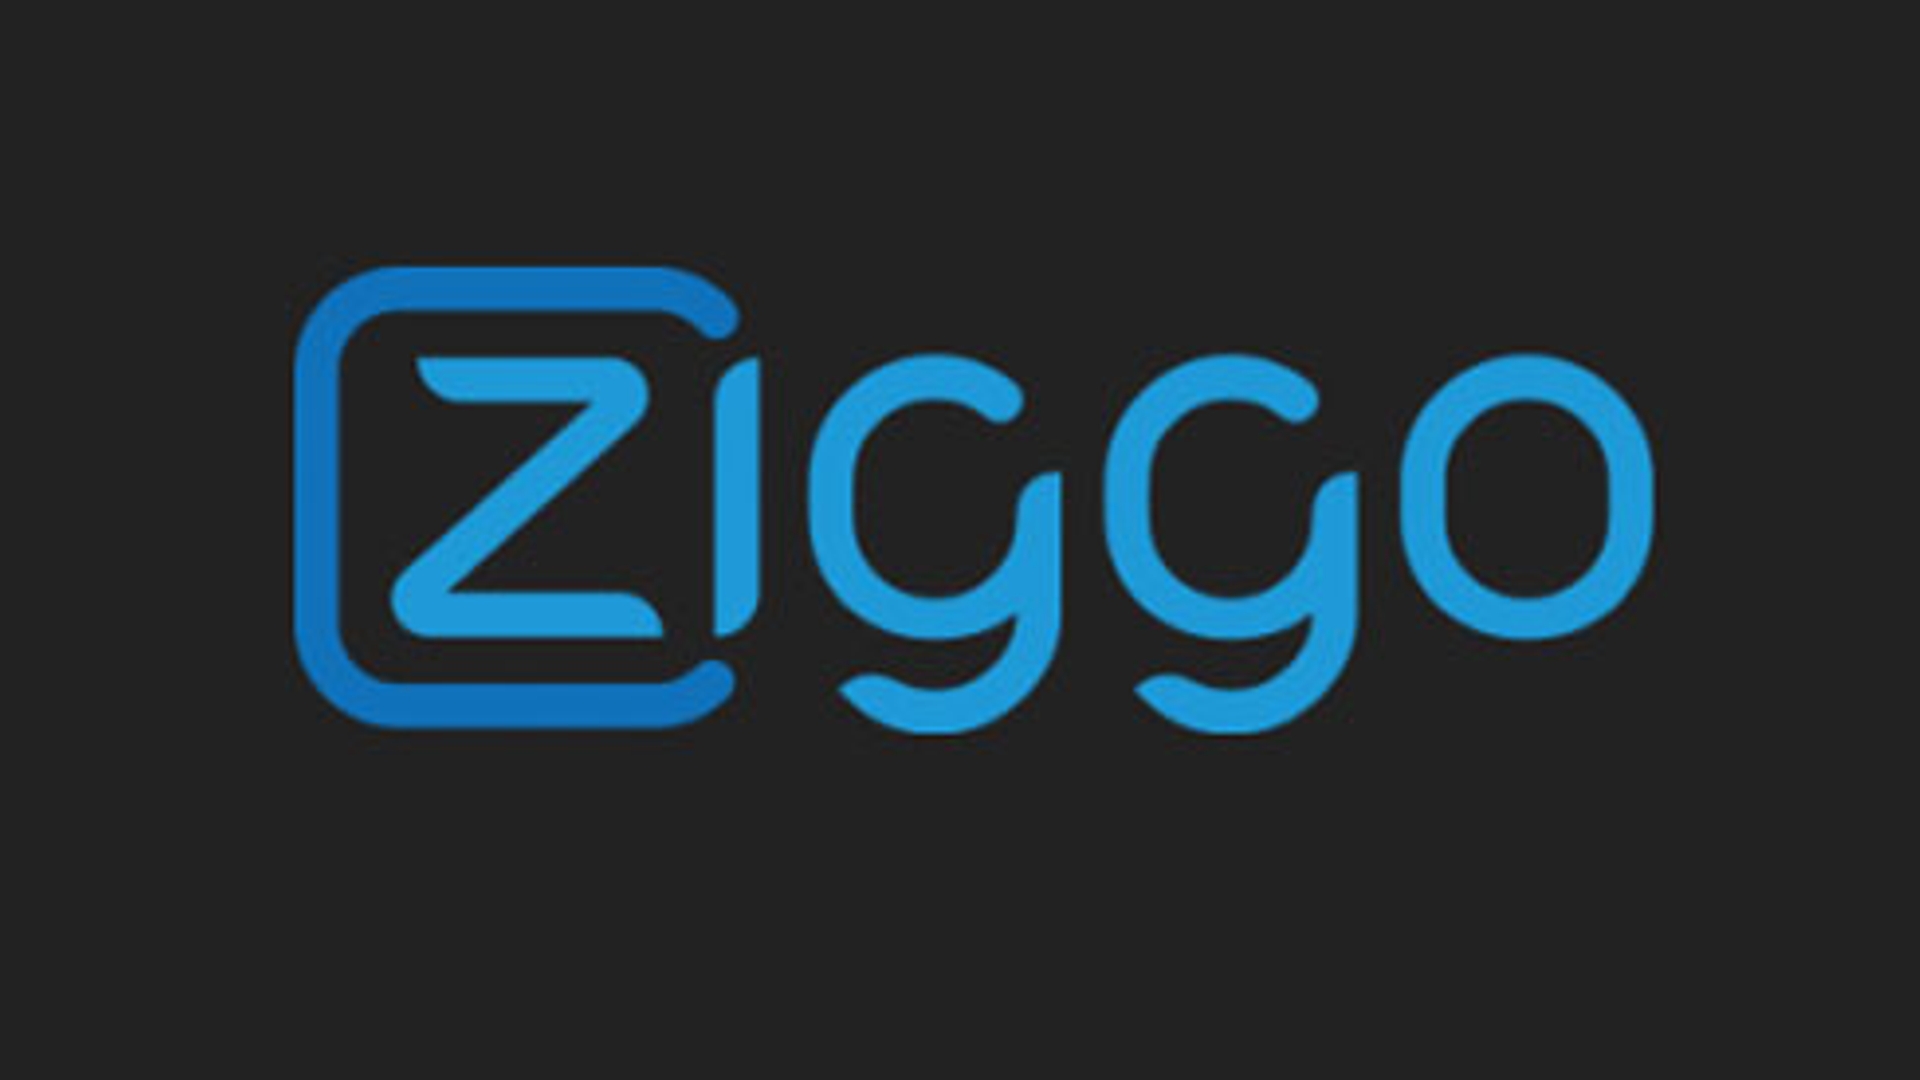 Logo_Ziggo_10.jpg